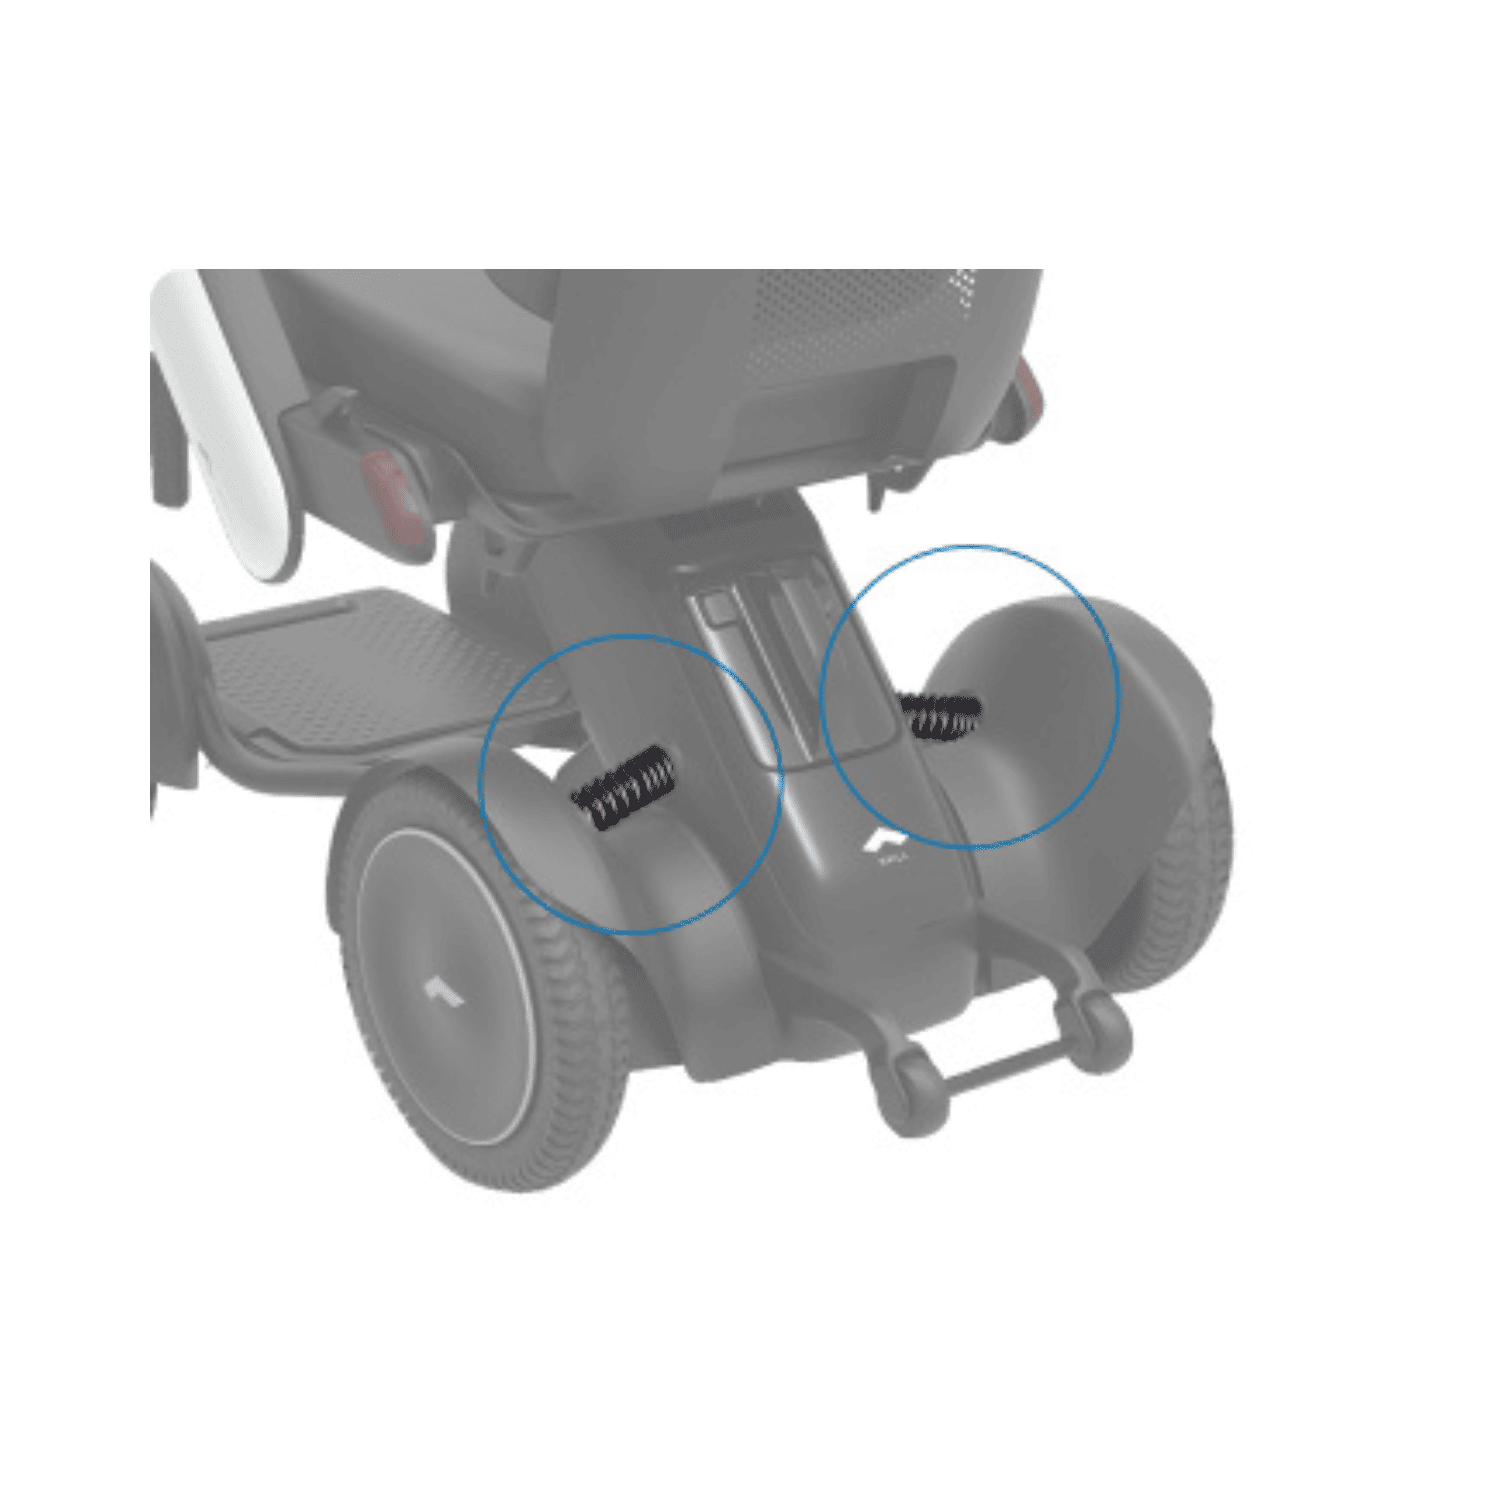 Whill Model C2 Power Wheelchair